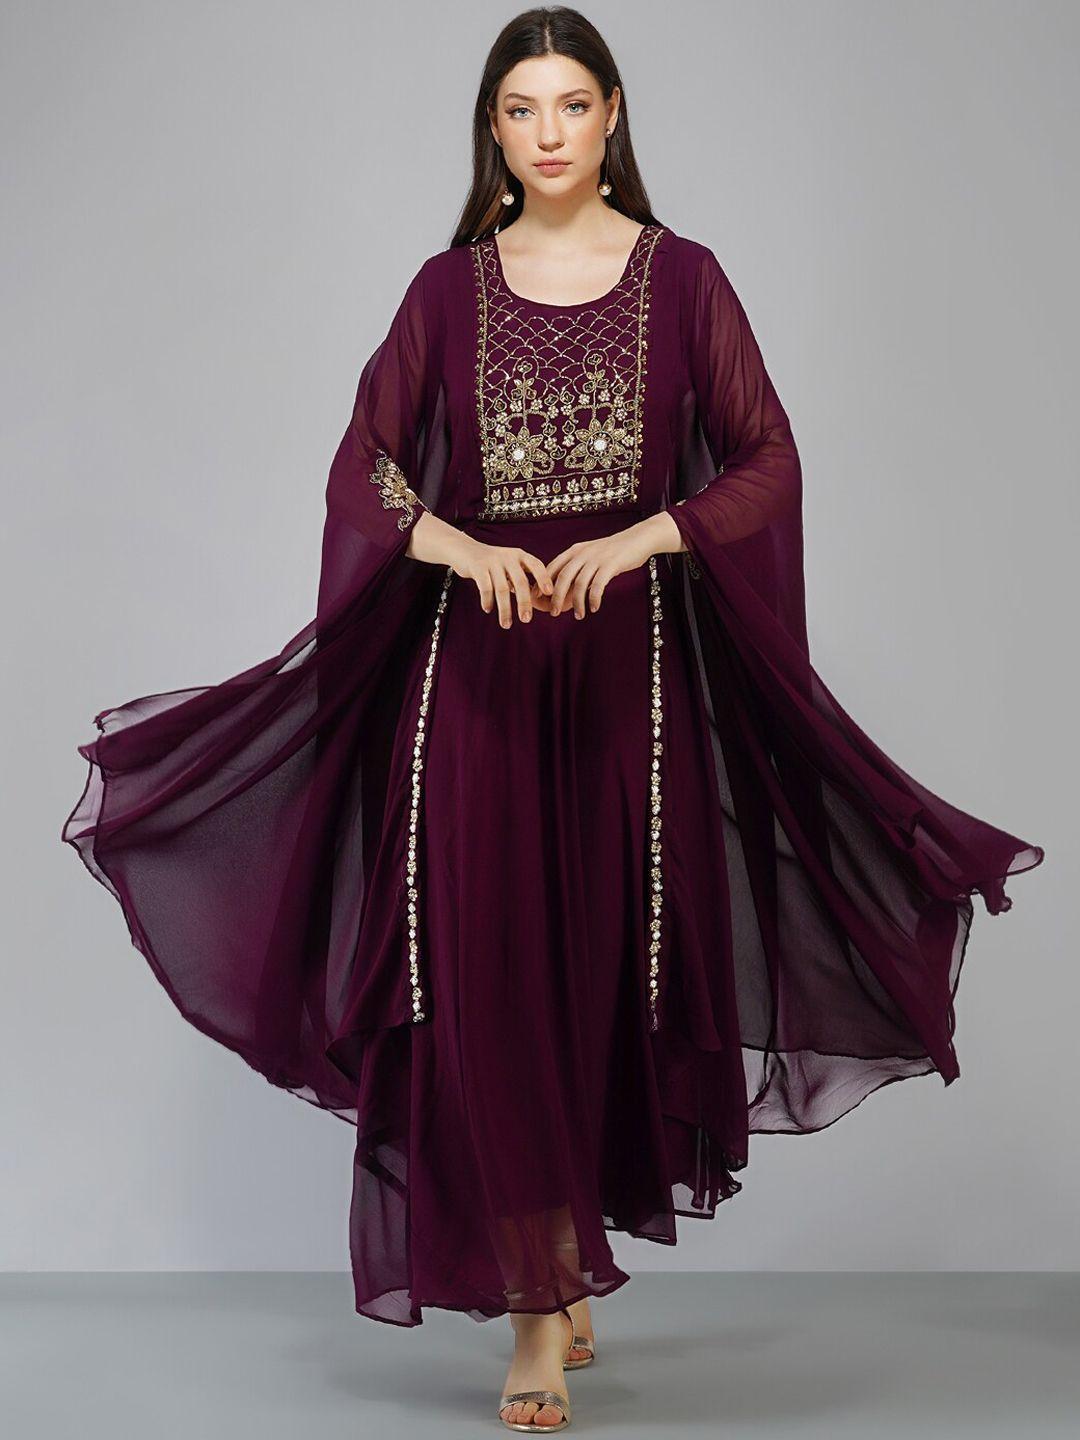 ziva fashion women burgundy embellished flared sleeves georgette maxi dress